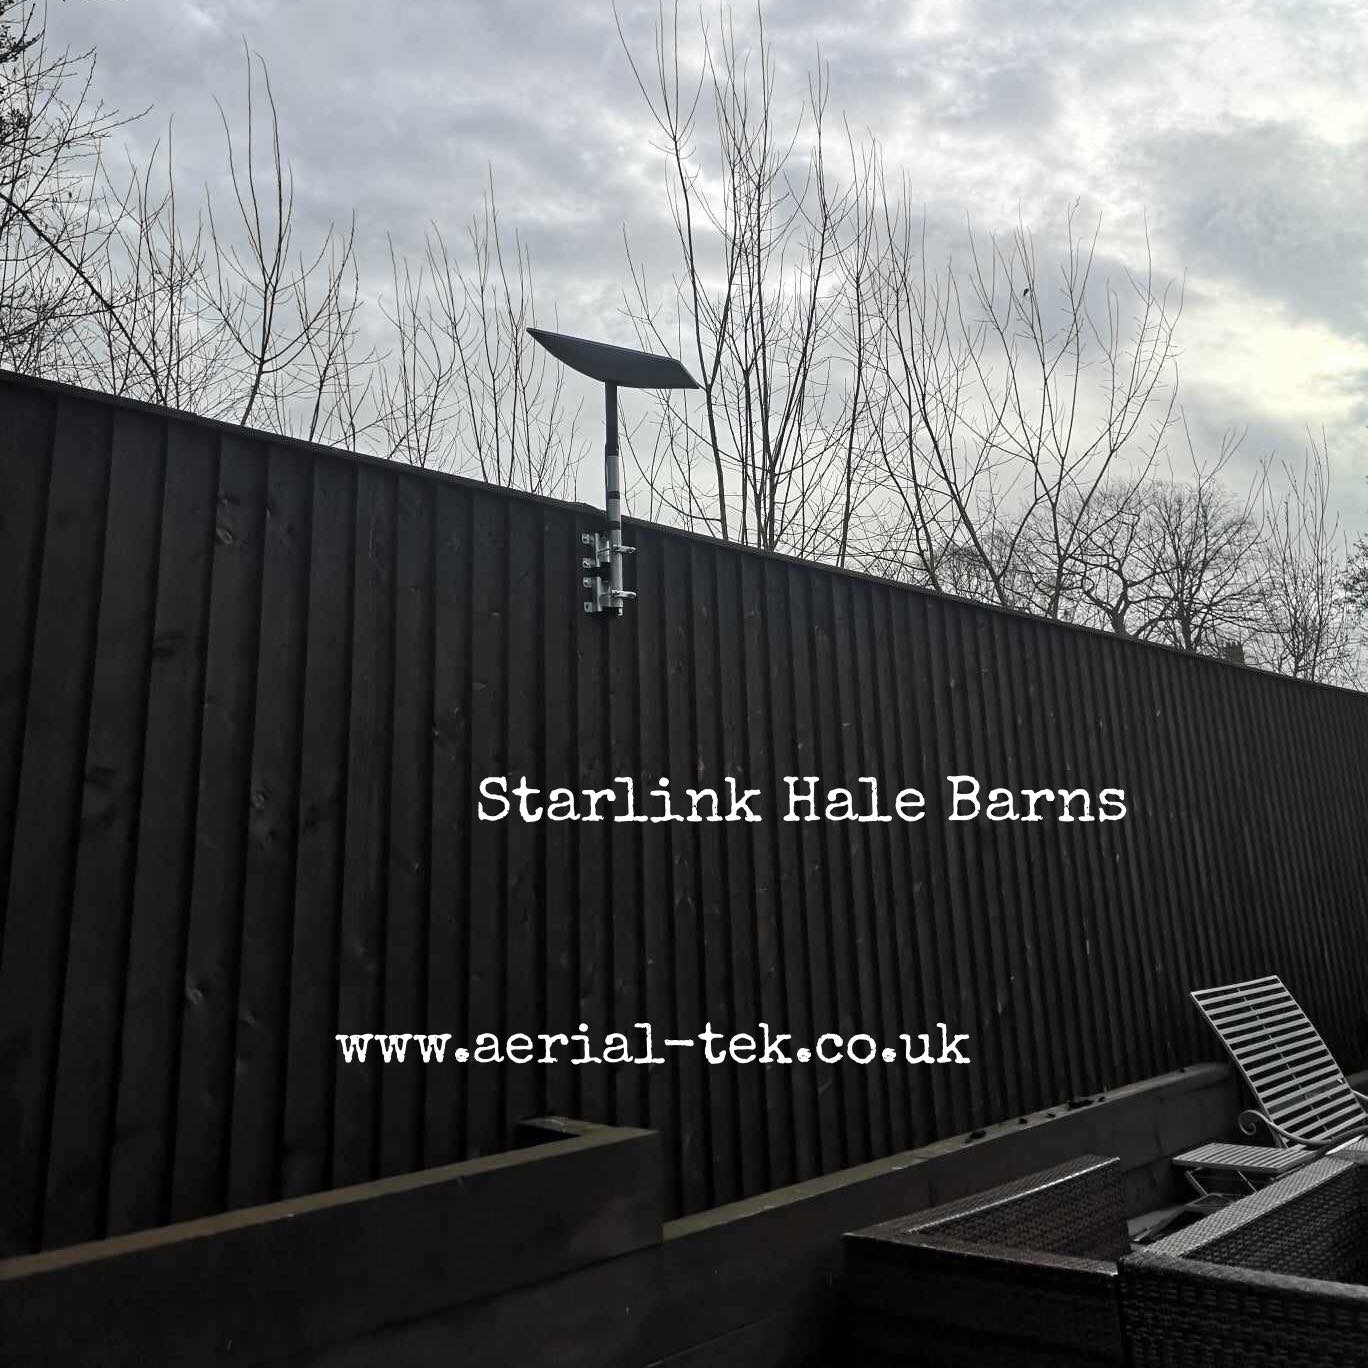 Starlink Hale Barns